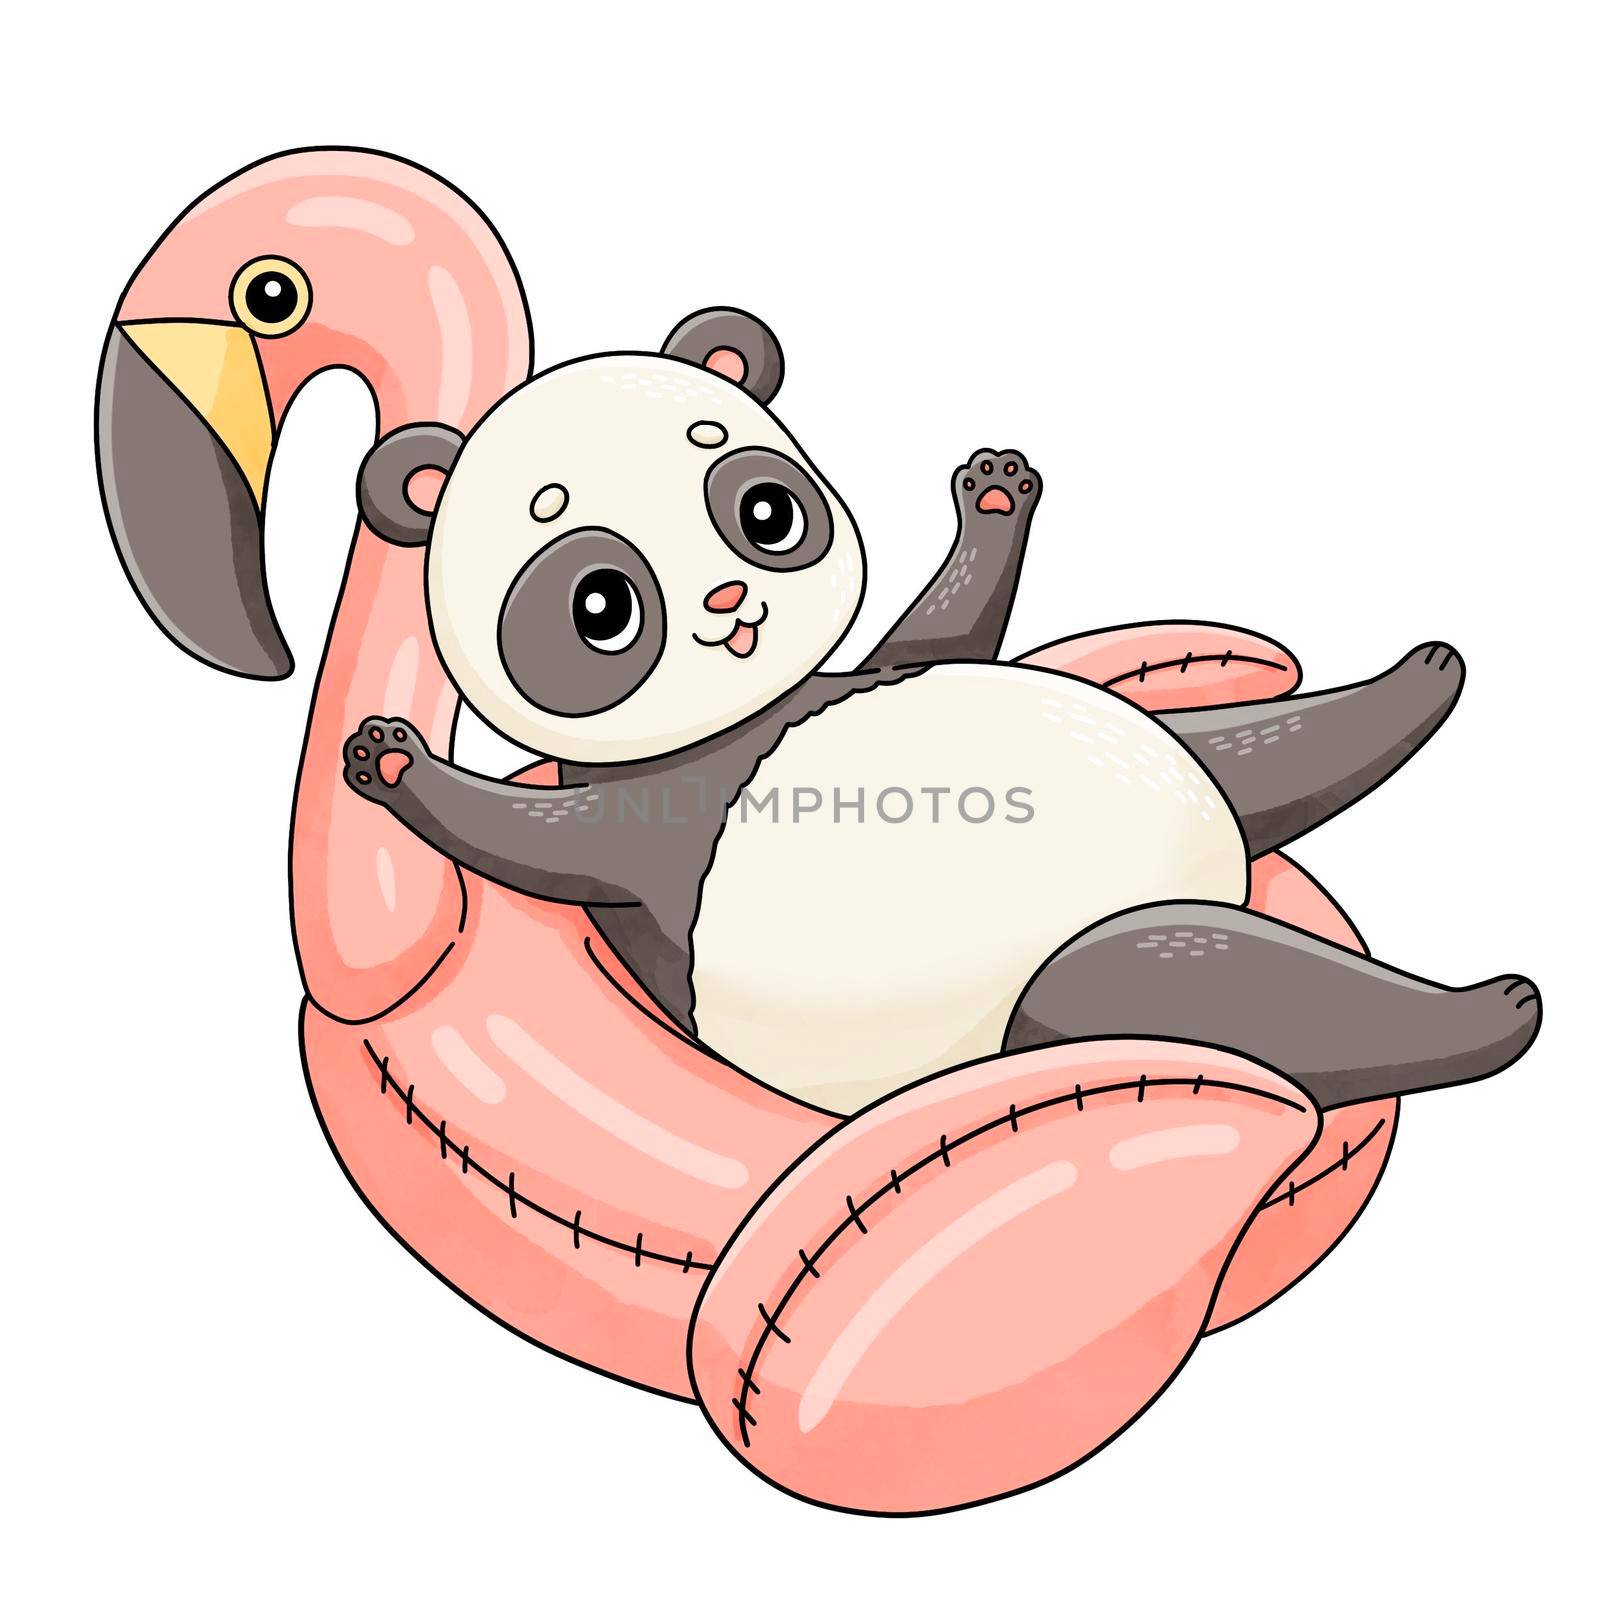 Summer panda on pink flamingo rubber ring illustration